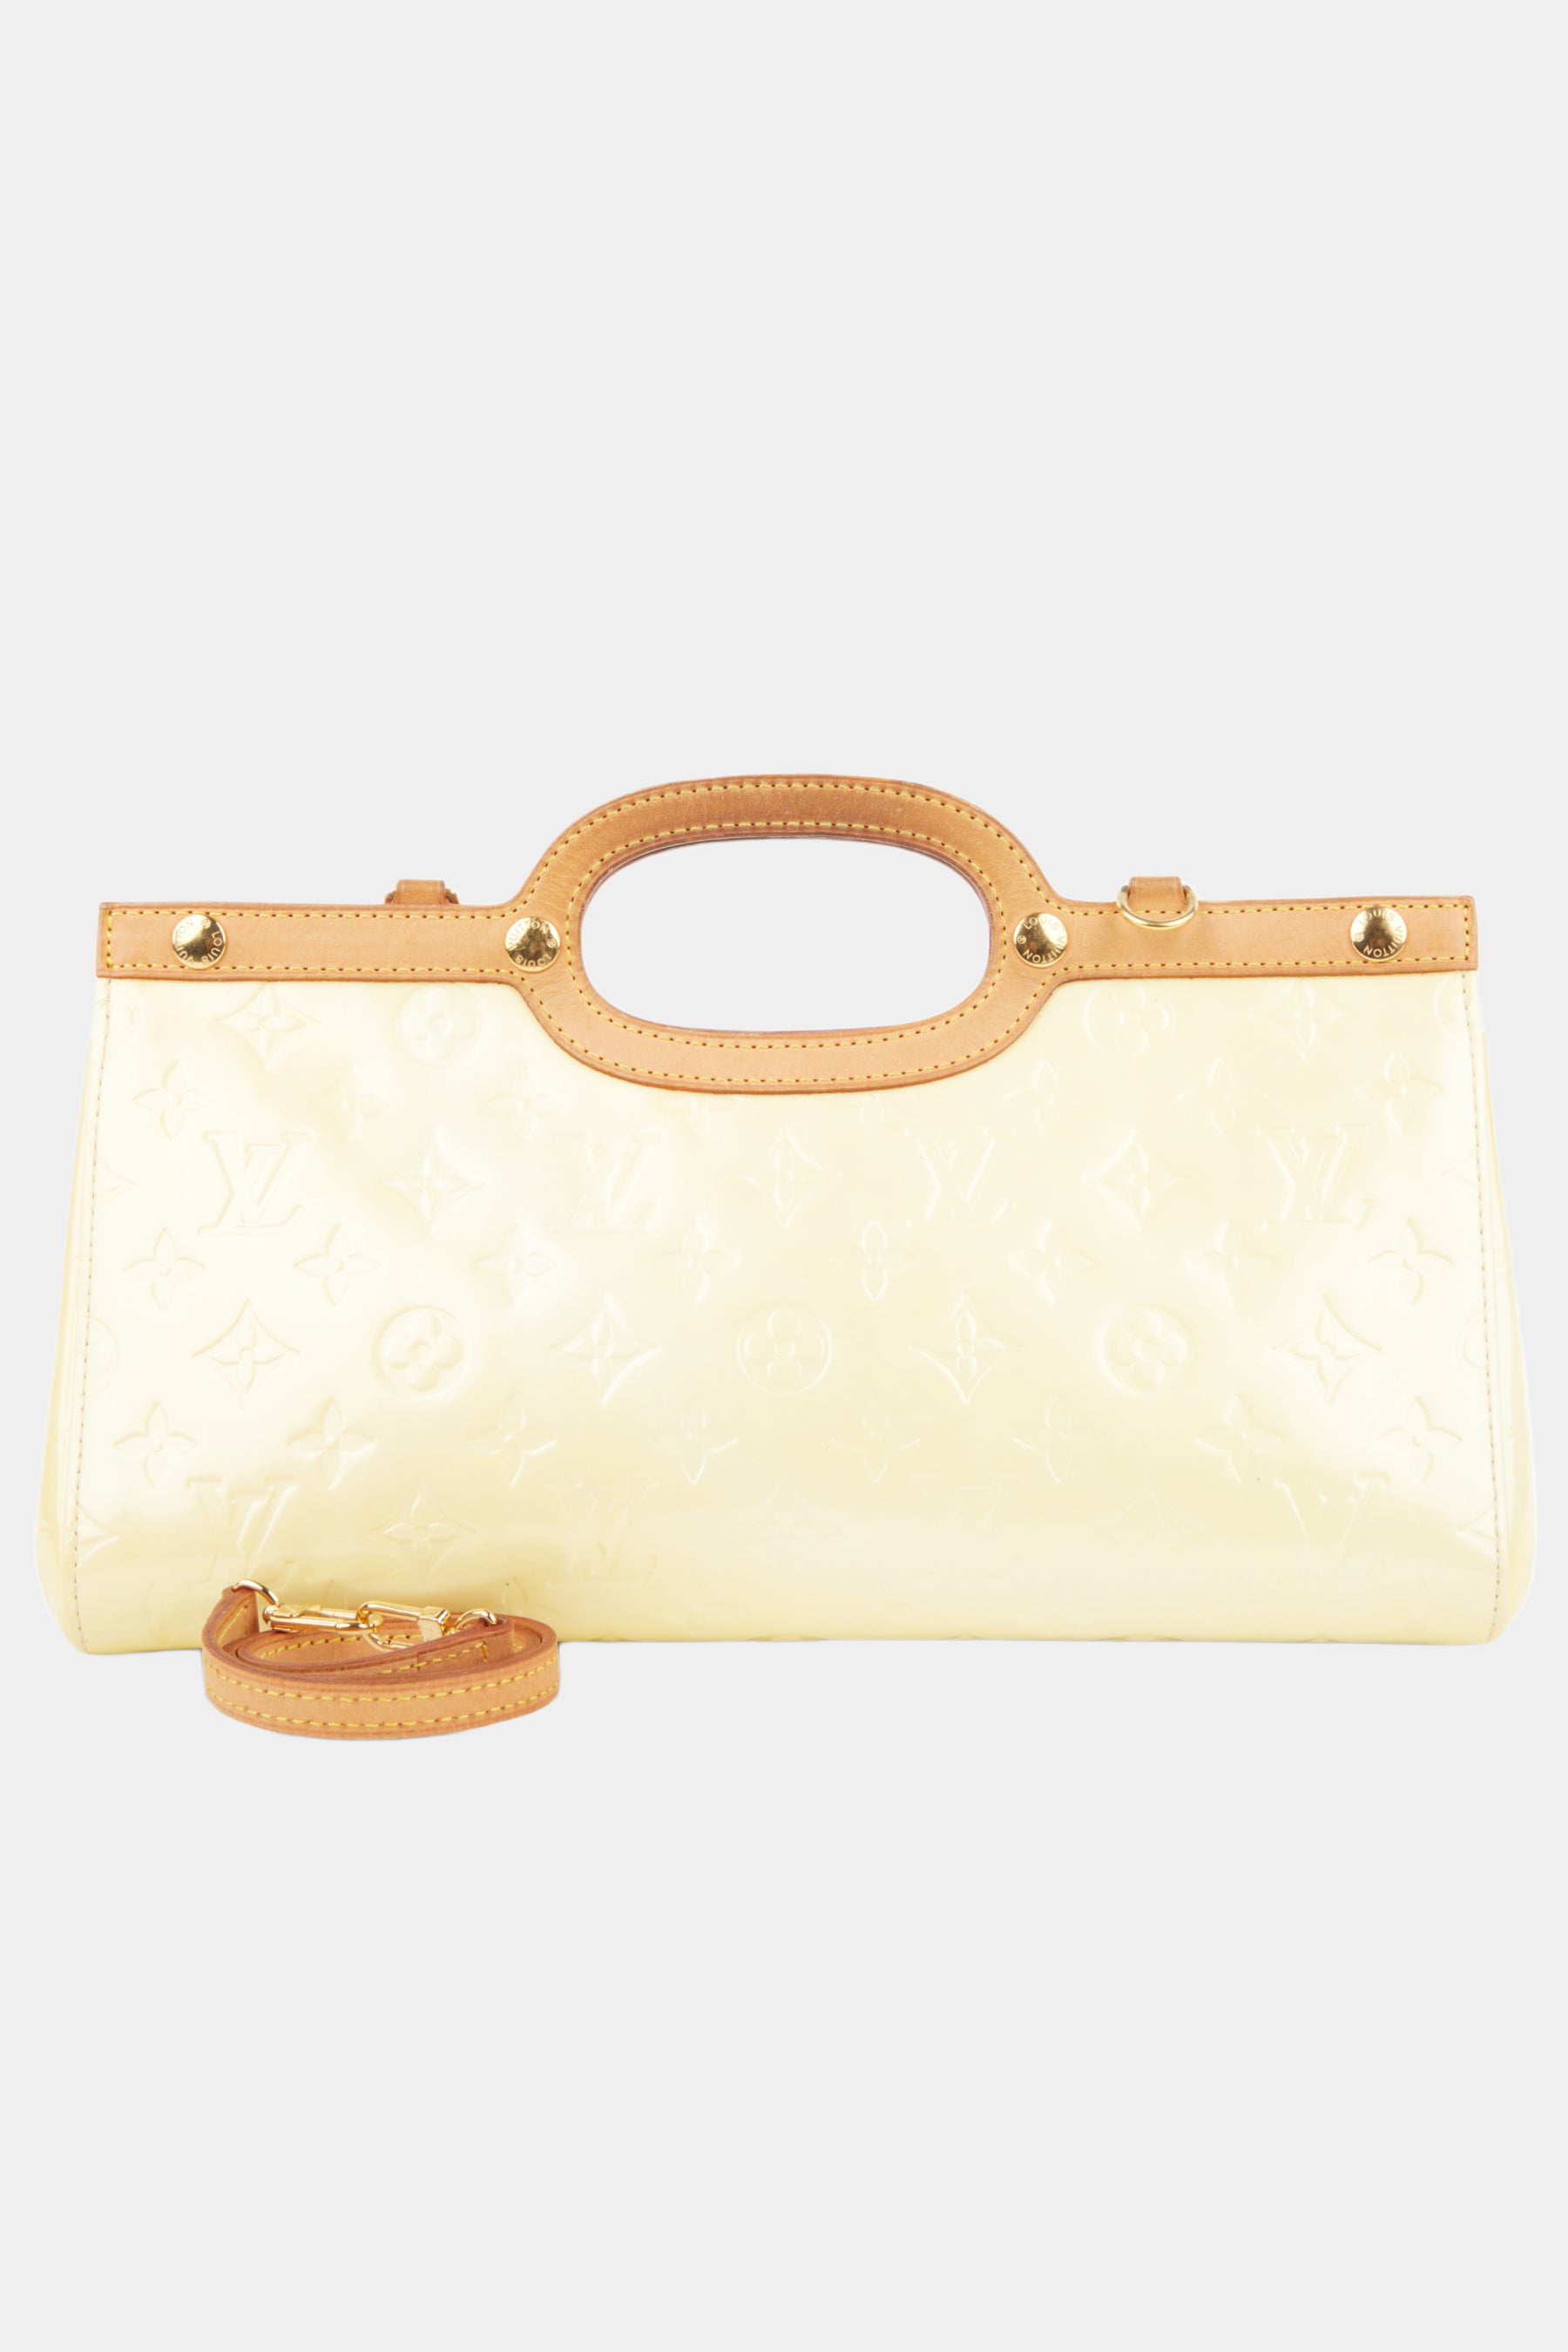 Pre-owned Louis Vuitton Roxbury Beige Patent Leather Handbag ()